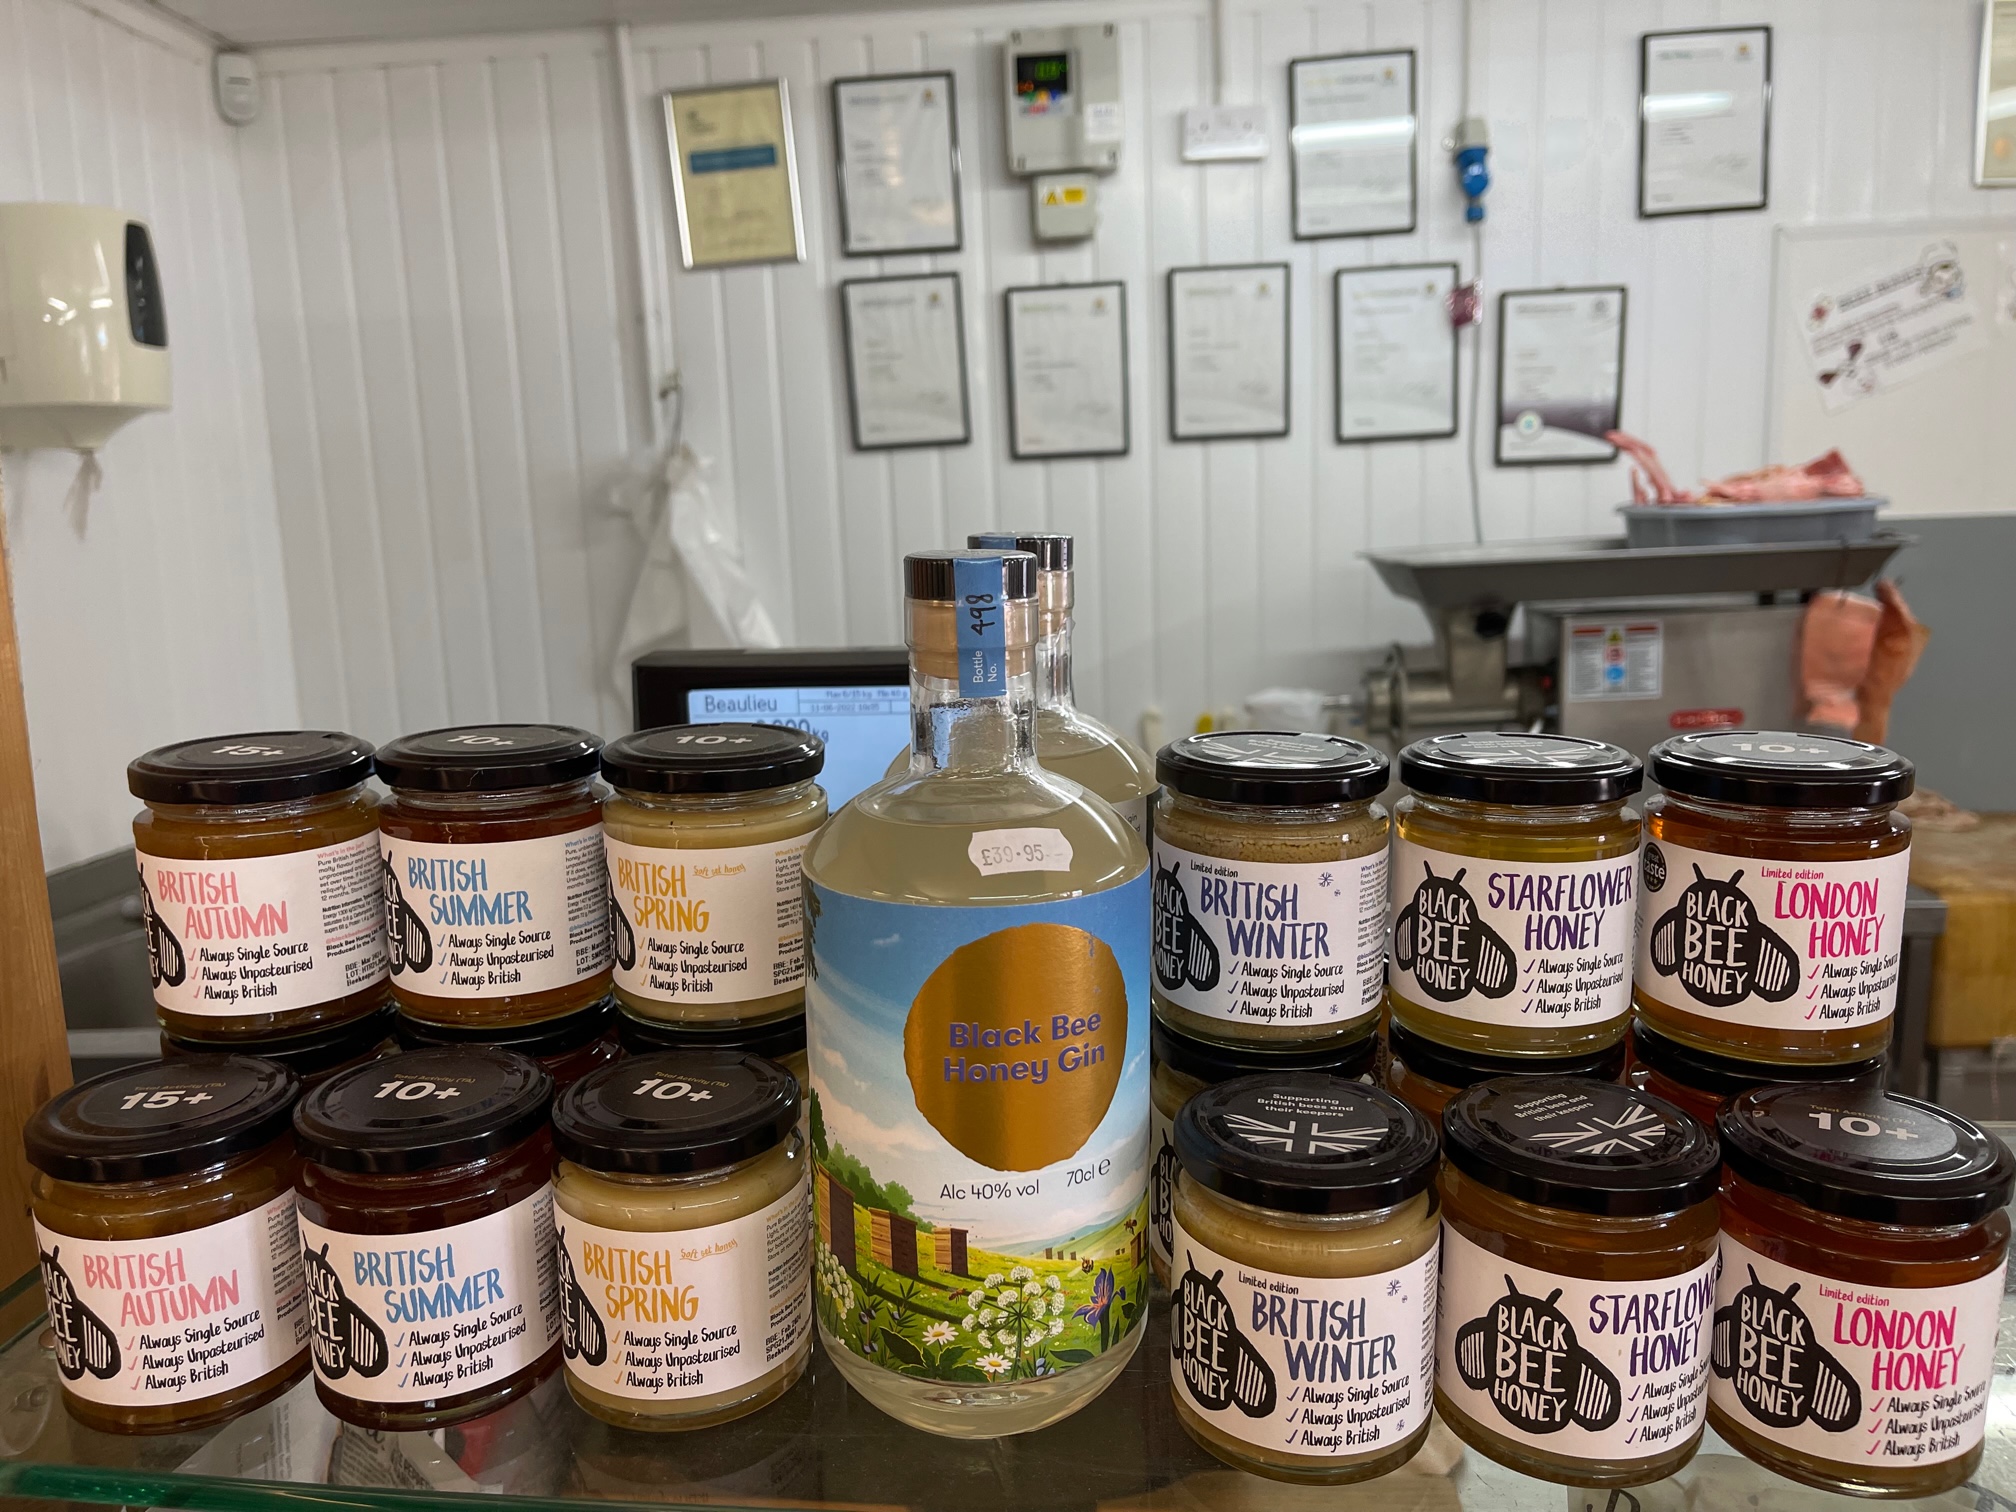 Selection of Black Bee Honey and Gin at Beaulieu Farm Shop